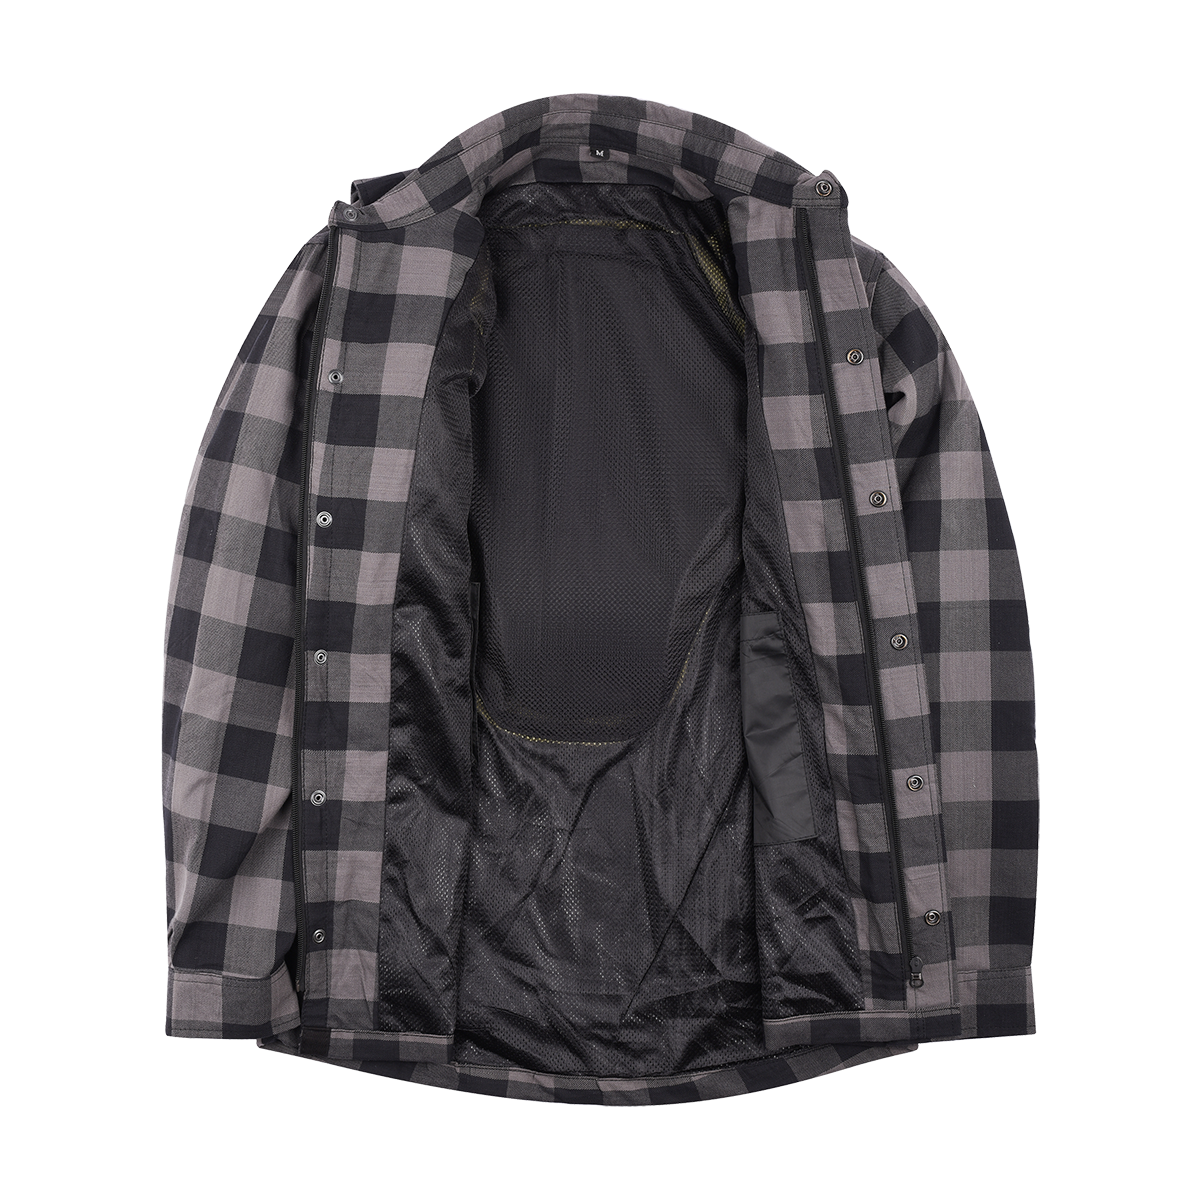 Vance Leathers USA’s Riding Shirts w/ Kevlar, Waterproof Zippers & Optional C.E. Armor